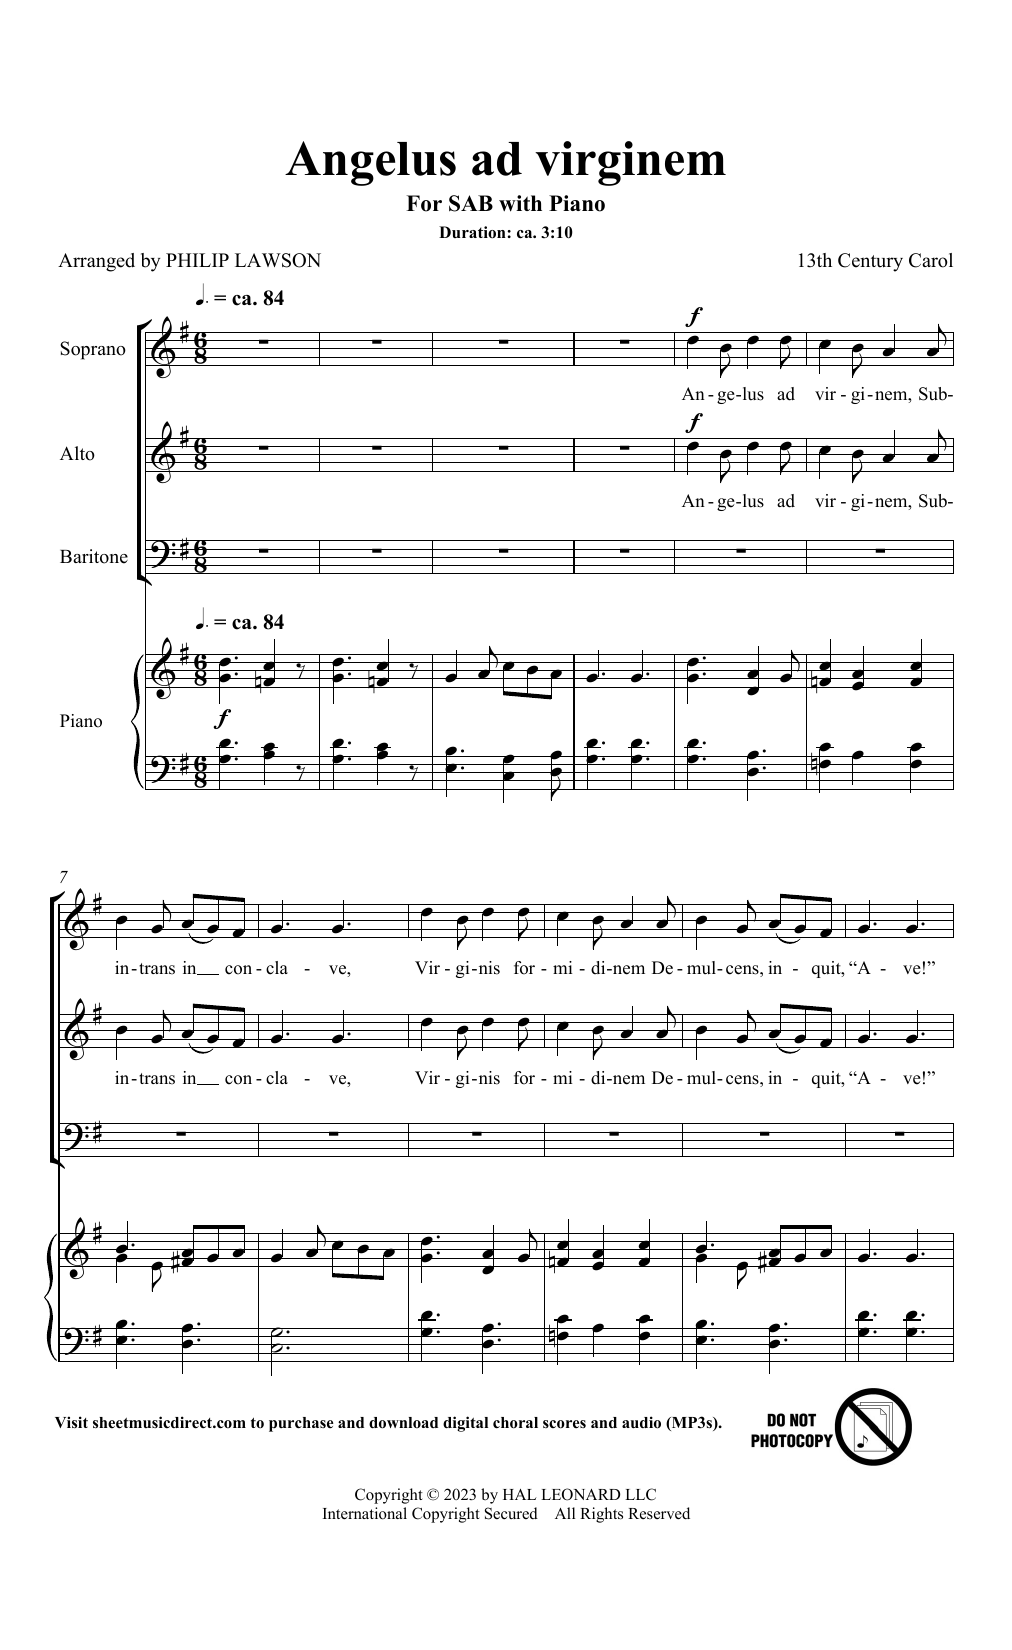 Medieval Carol Angelus Ad Virginem (arr. Philip Lawson) Sheet Music Notes & Chords for SAB Choir - Download or Print PDF